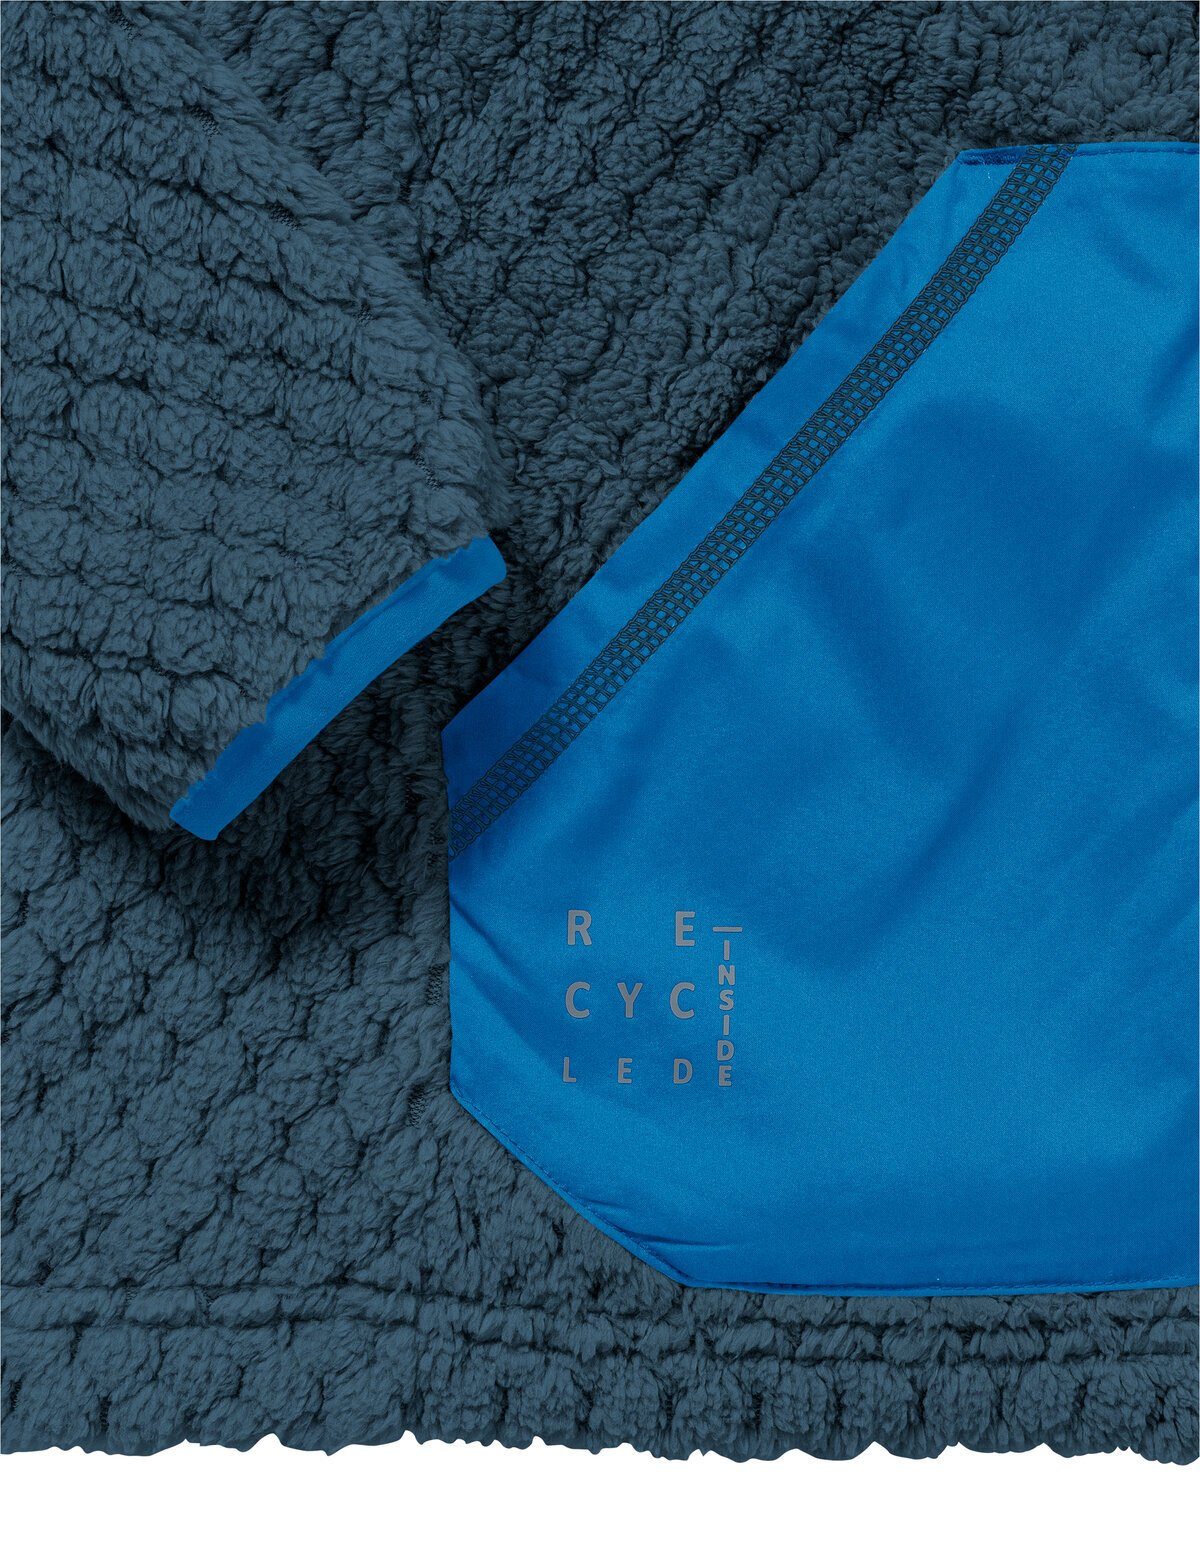 Outdoorjacke sea/blue Klimaneutral VAUDE Jacket dark (1-St) Kids kompensiert Fleece Manukau